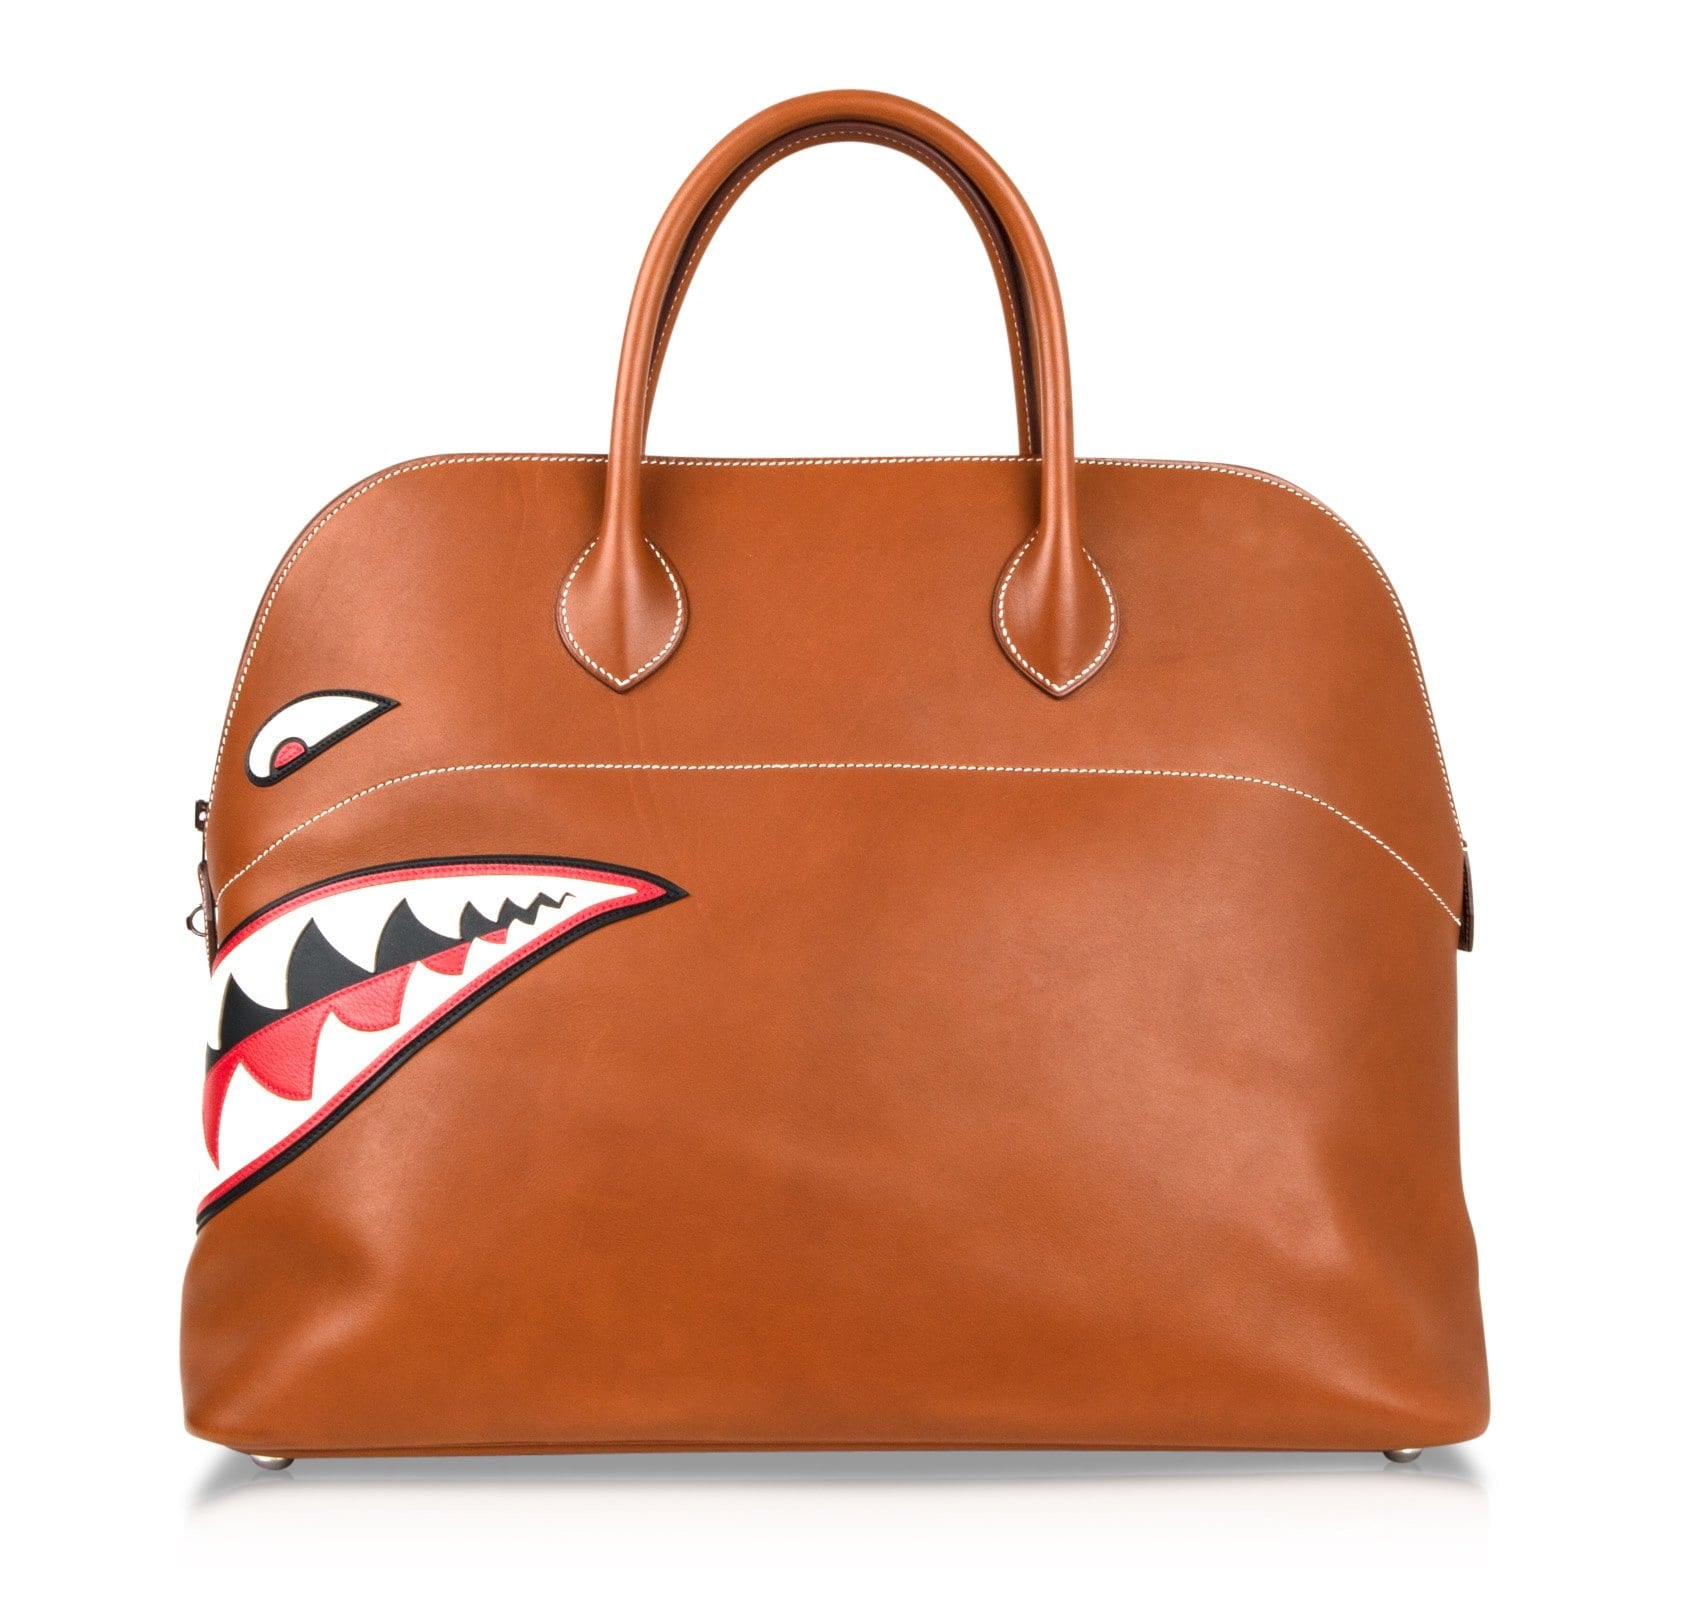 Hermes Bolide Bag - Design and Brief History